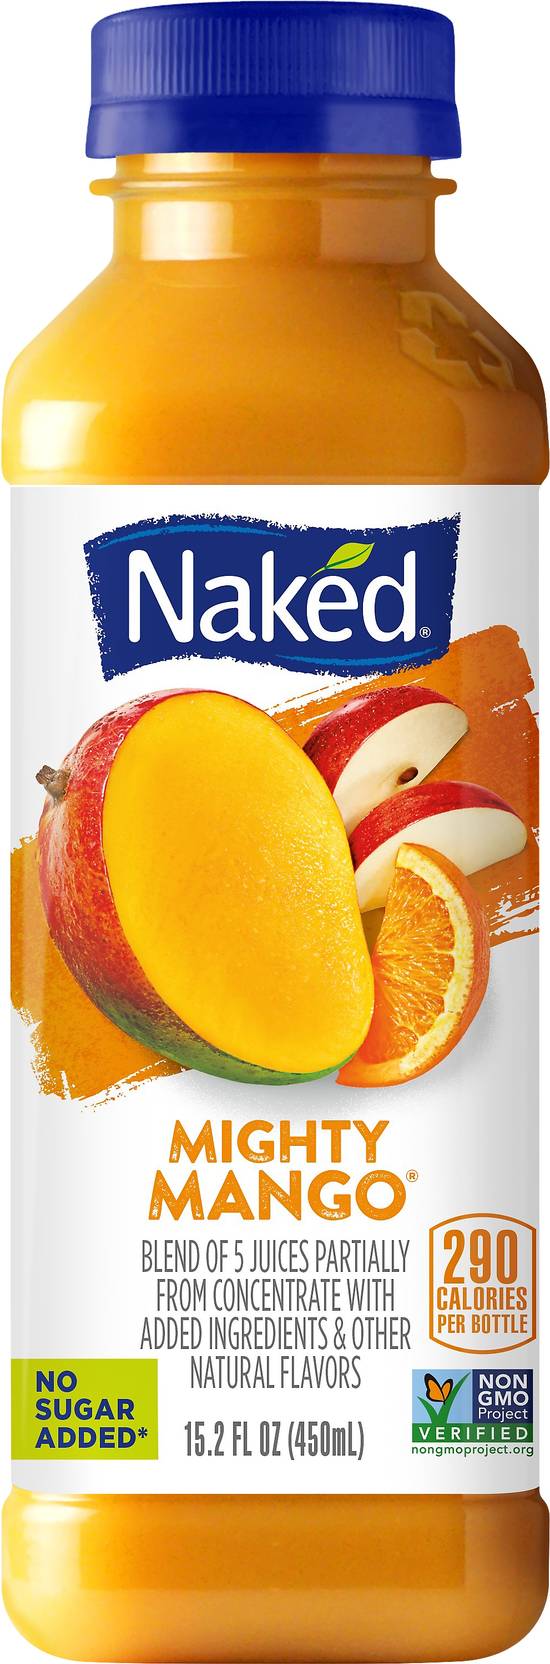 Naked Mighty Mango Blend Juice (15.2 fl oz)